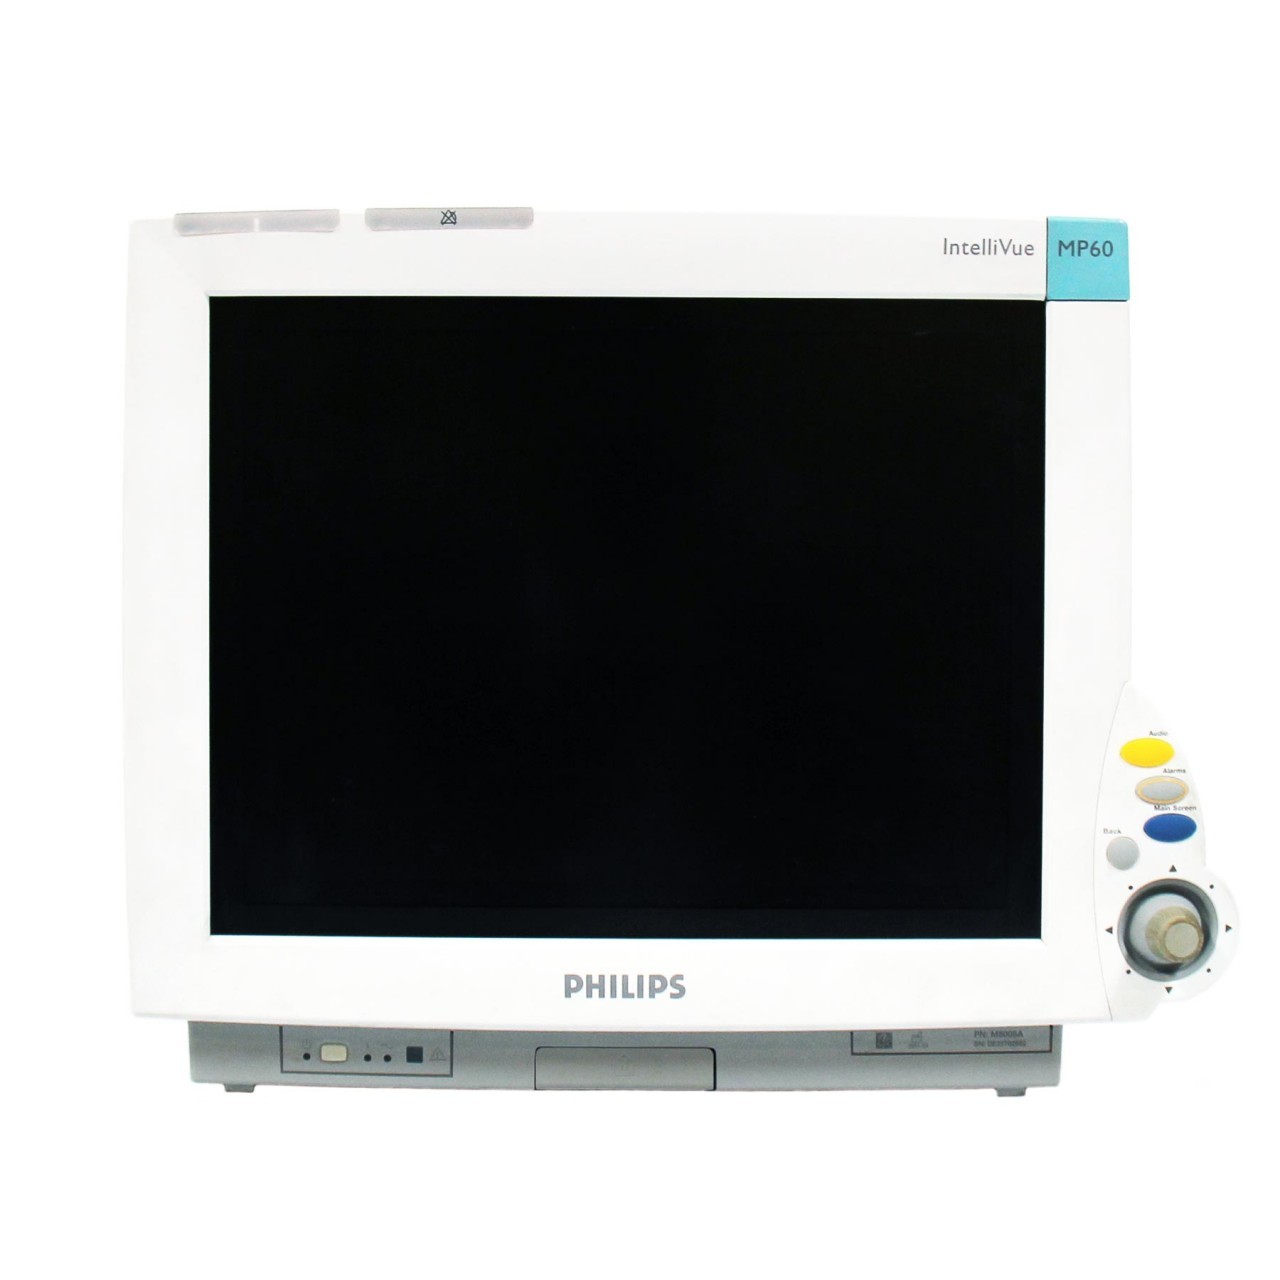 Monitor Philips Intellivue MP60